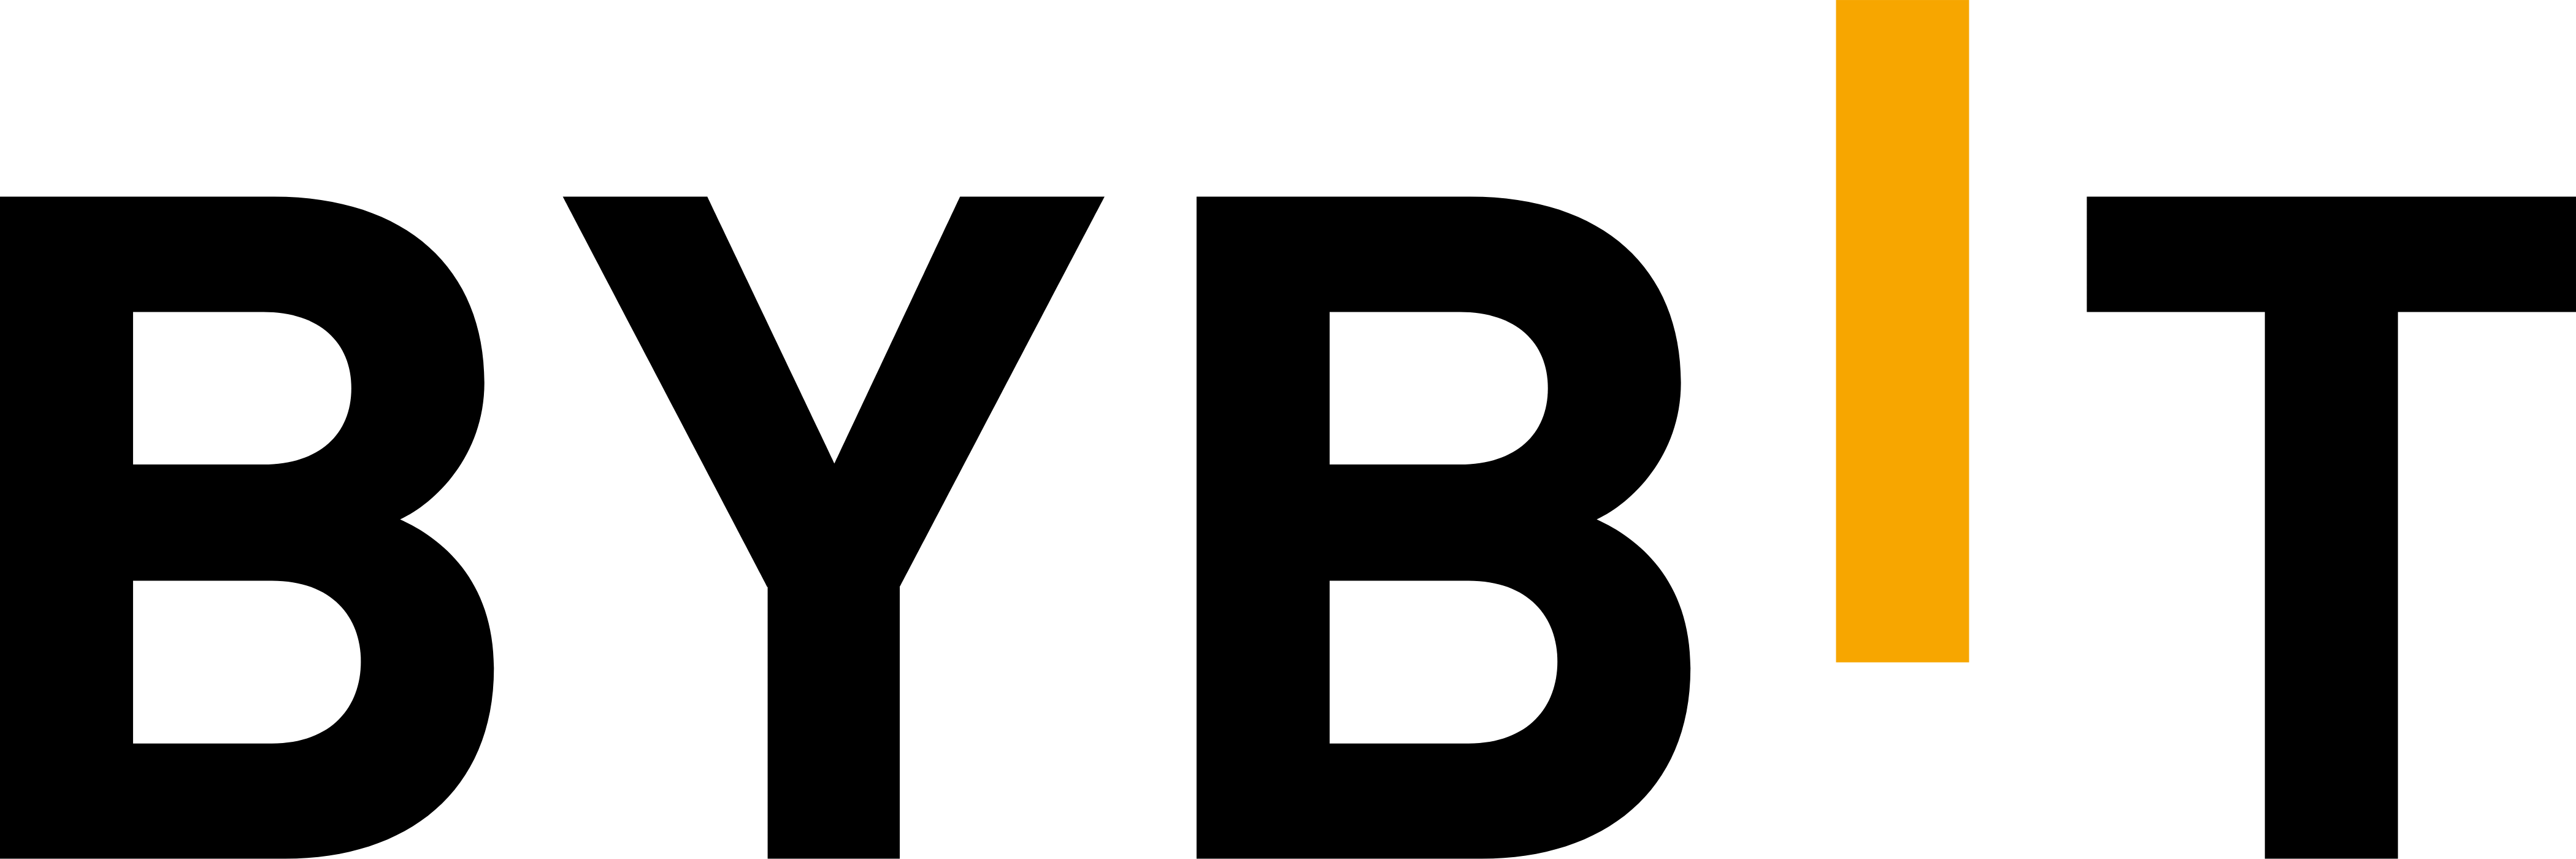 Logo sàn giao dịch crypto Bybit - Icryptobook